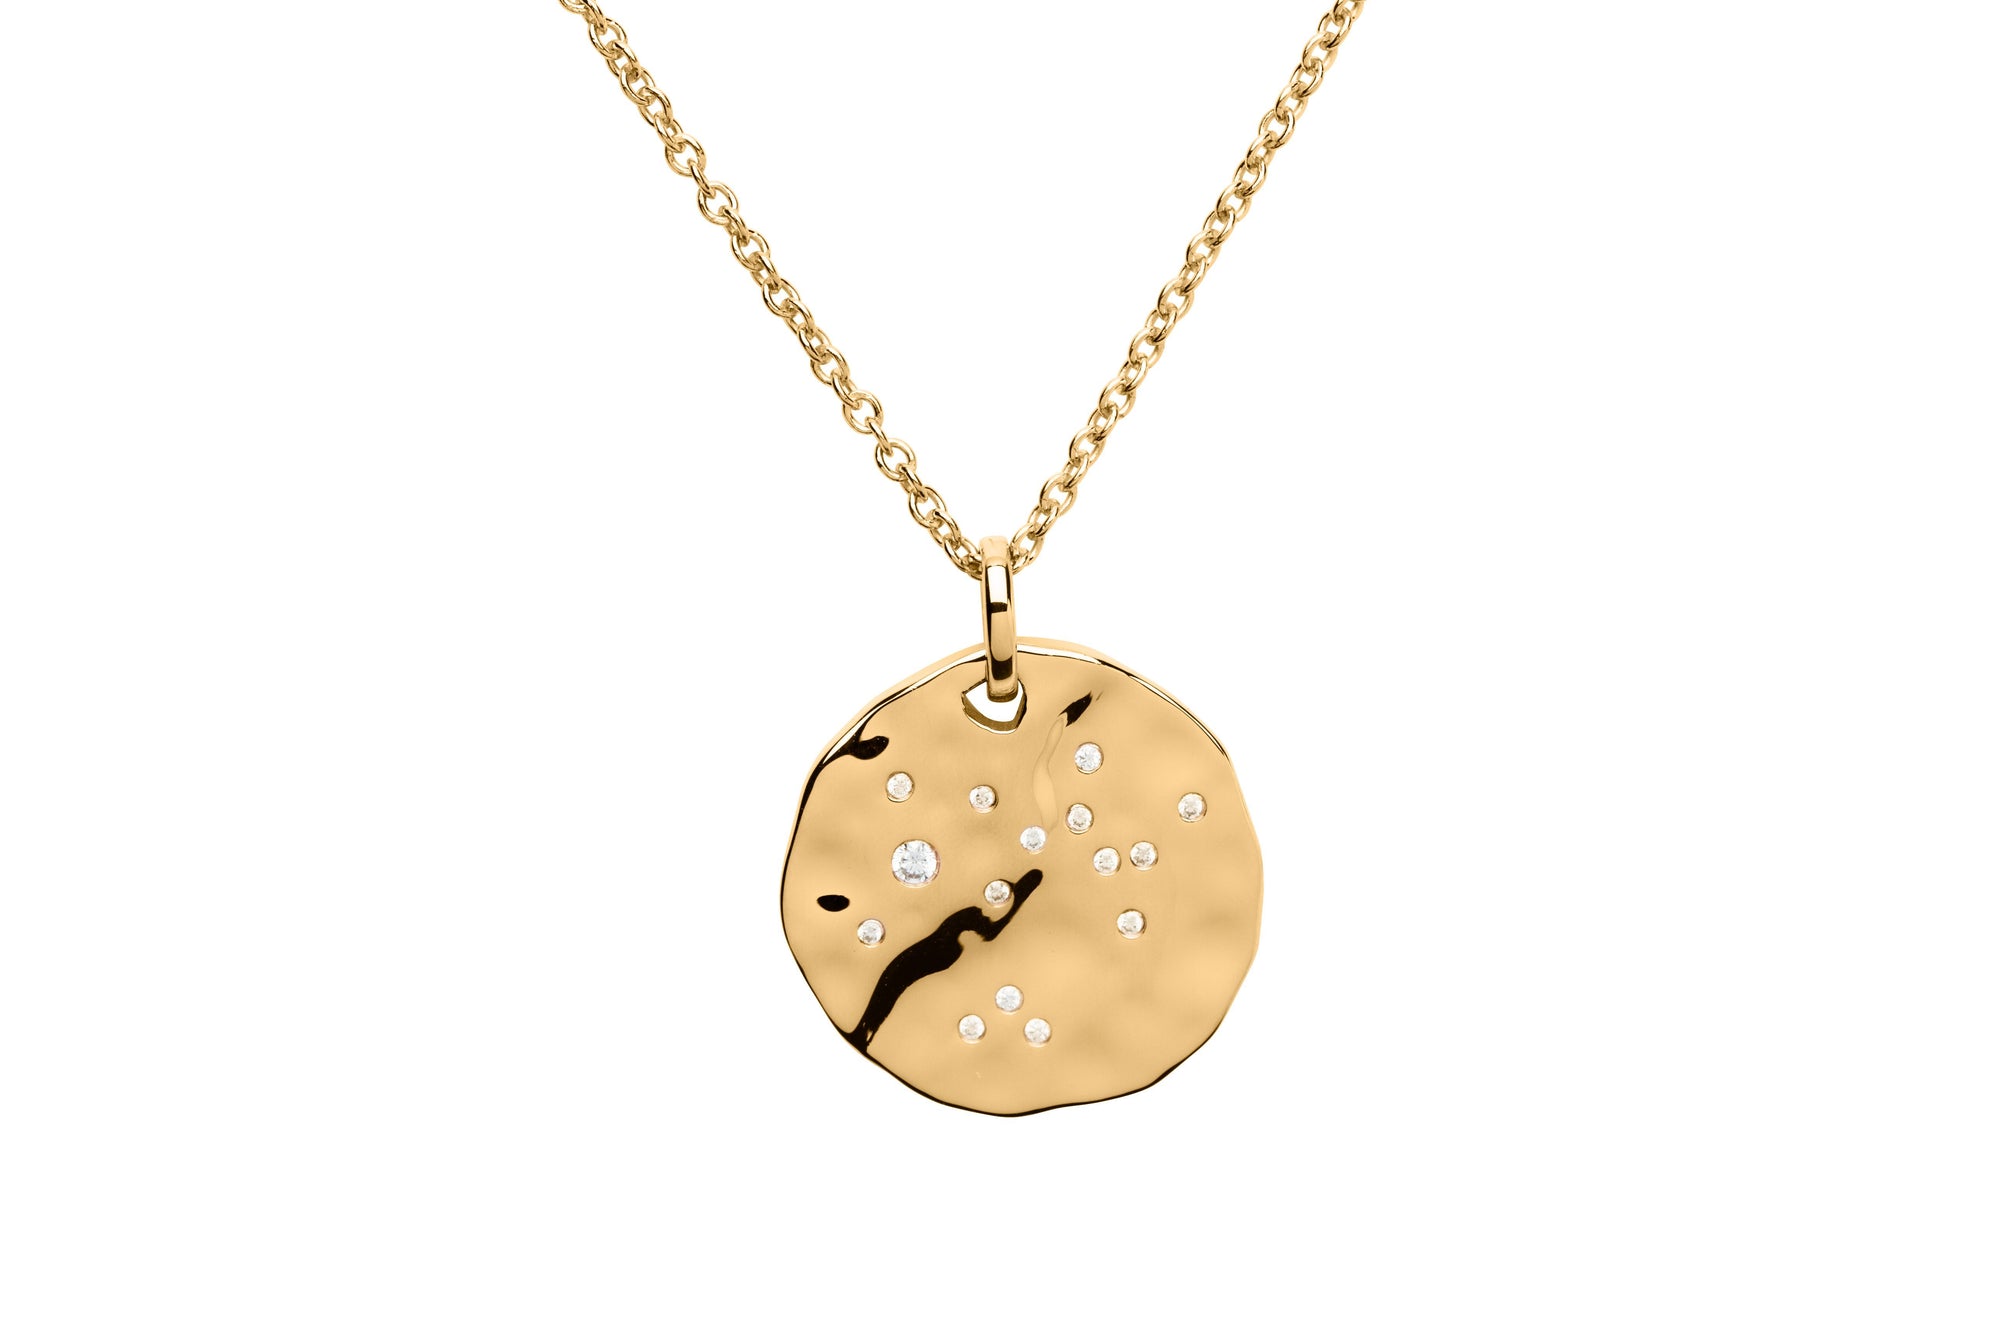 Sagittarius Constellation Pendant in Gold Vermeil with CZ's Necklaces & Pendants Unique 